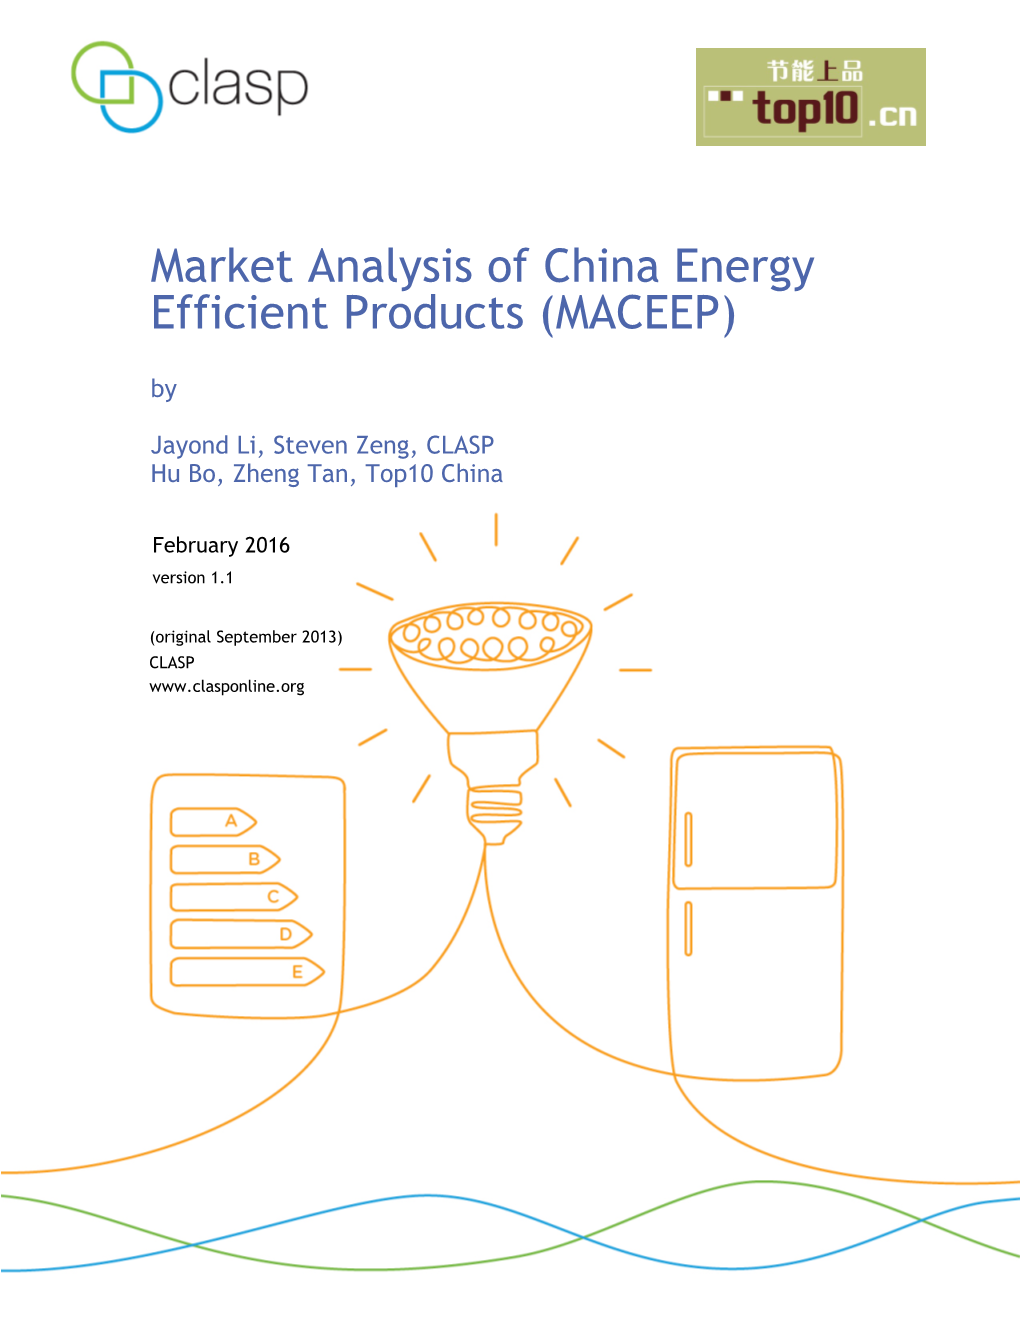 Market Analysis of China Energy Efficient Appliances